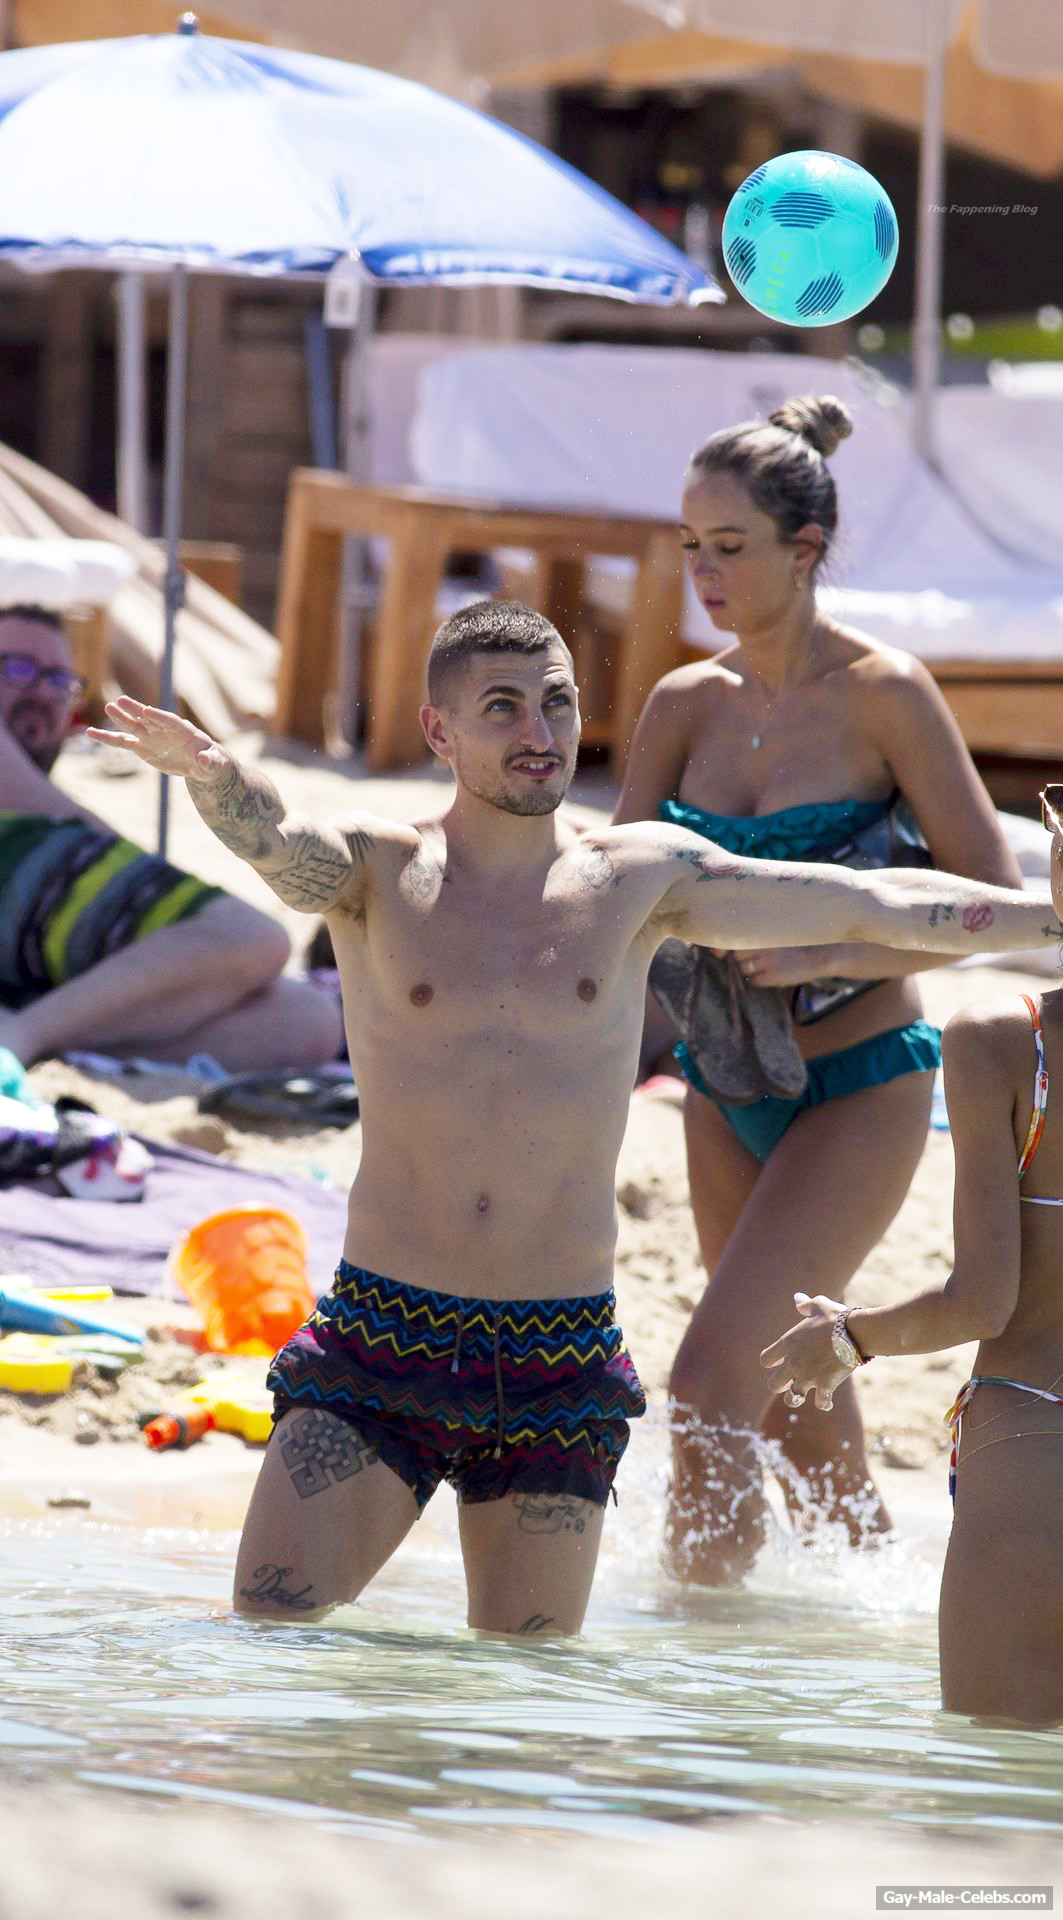 Marco Verratti Sunbathing Shirtless On A Beach